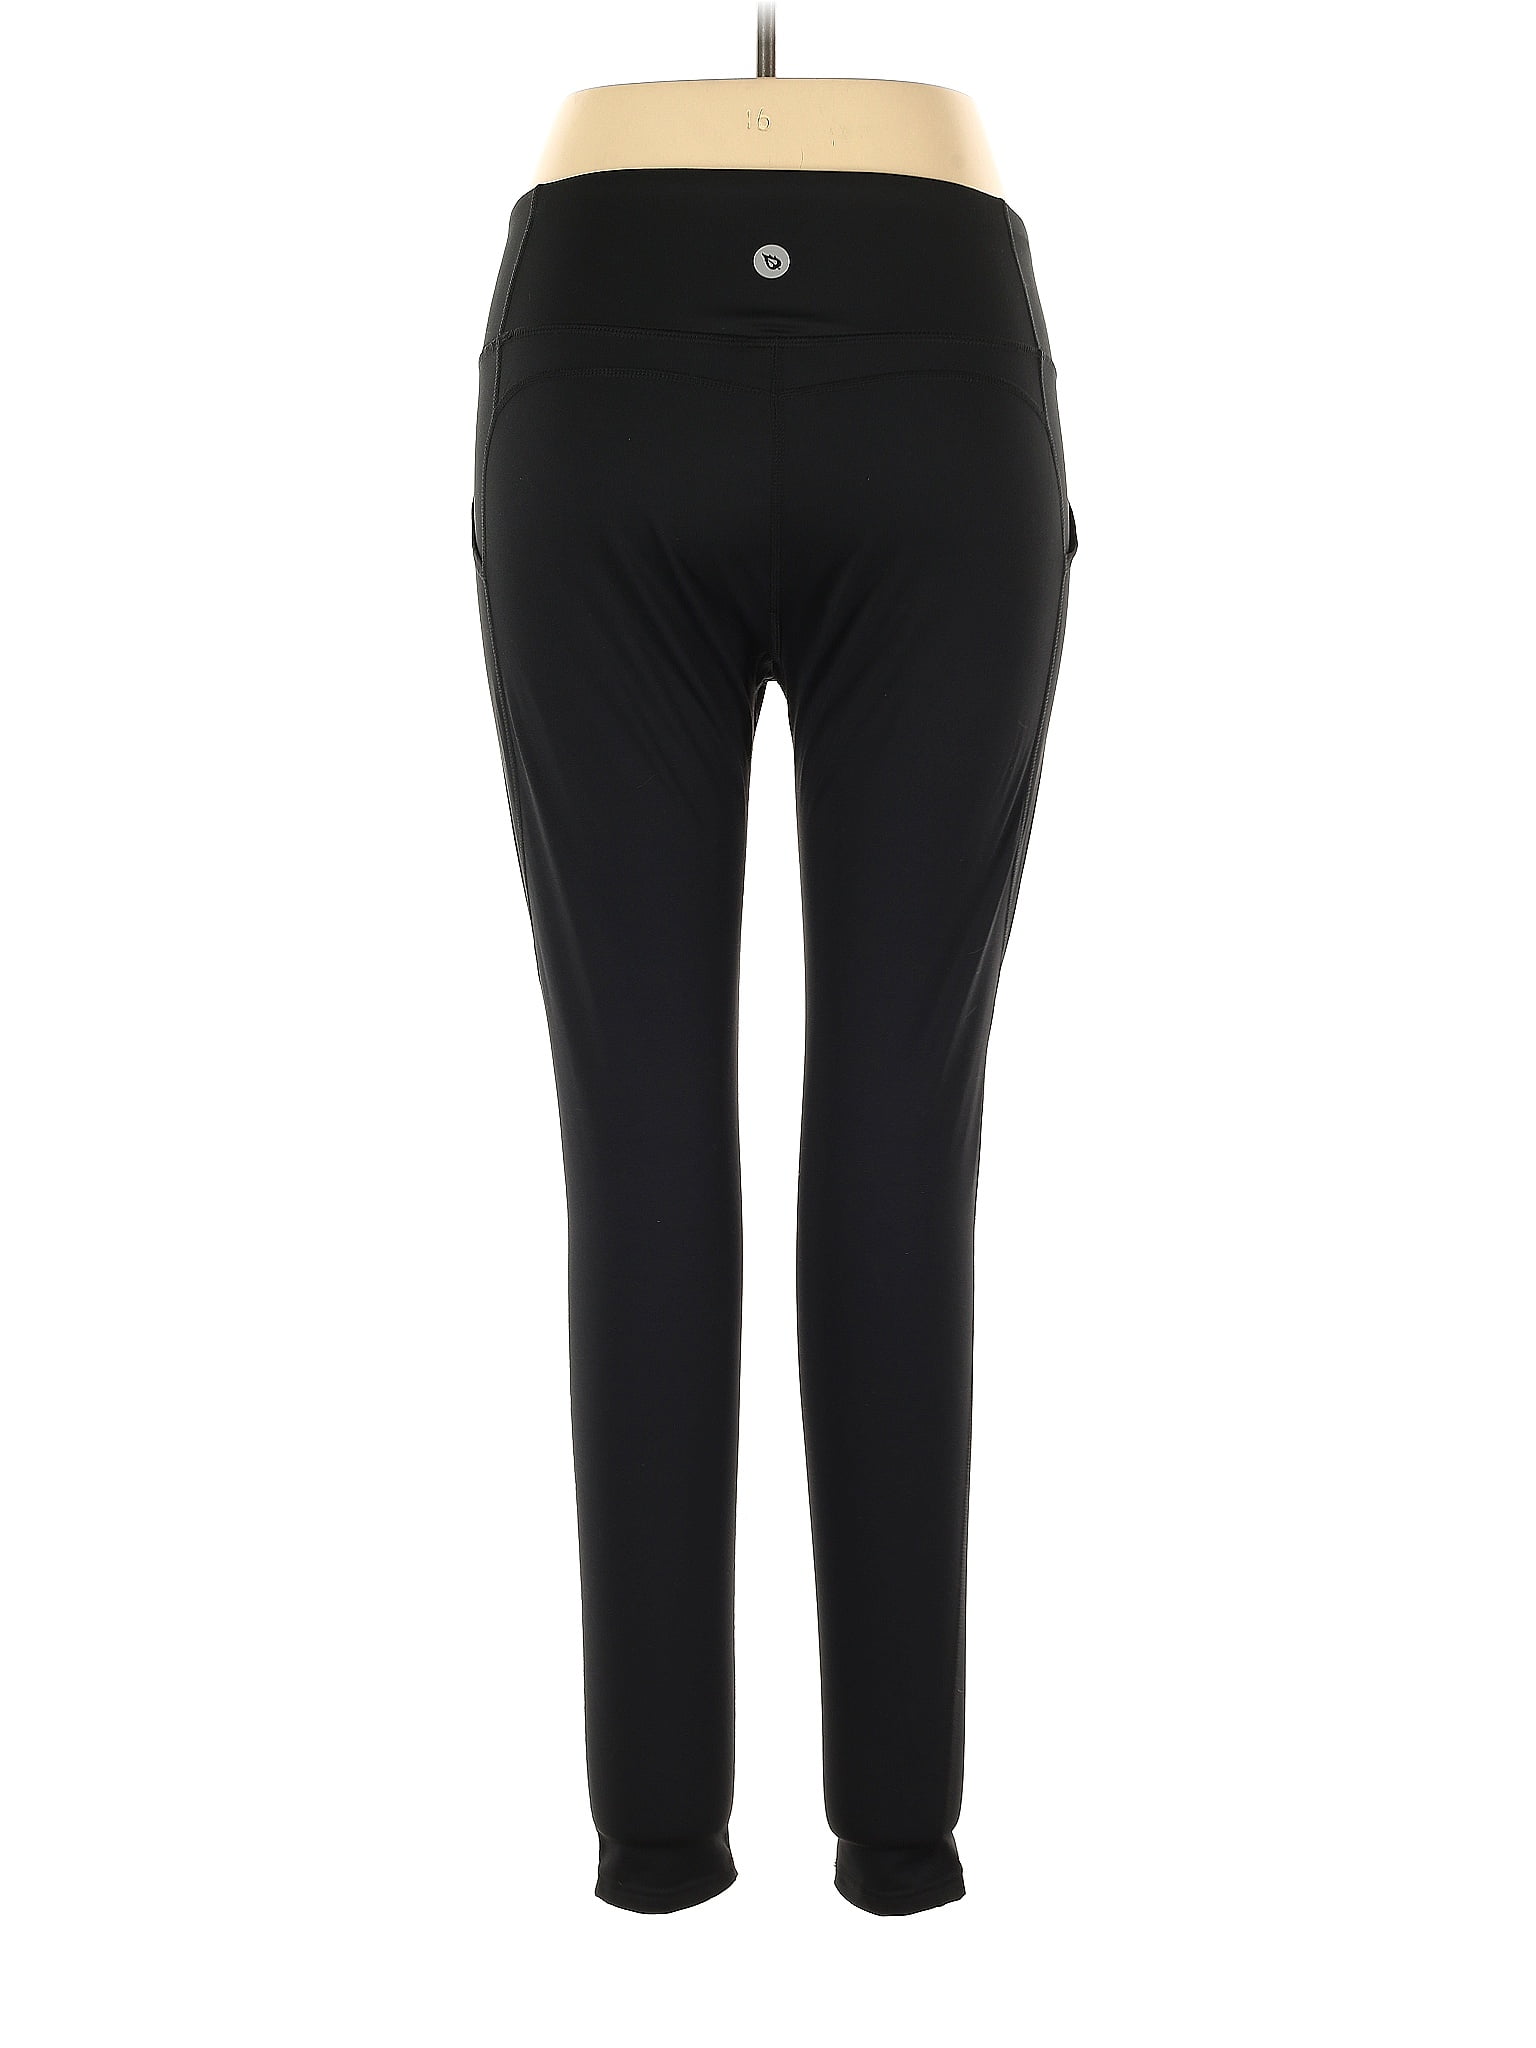 Baleaf Sports 100% Polyester Black Active Pants Size XL - 42% off